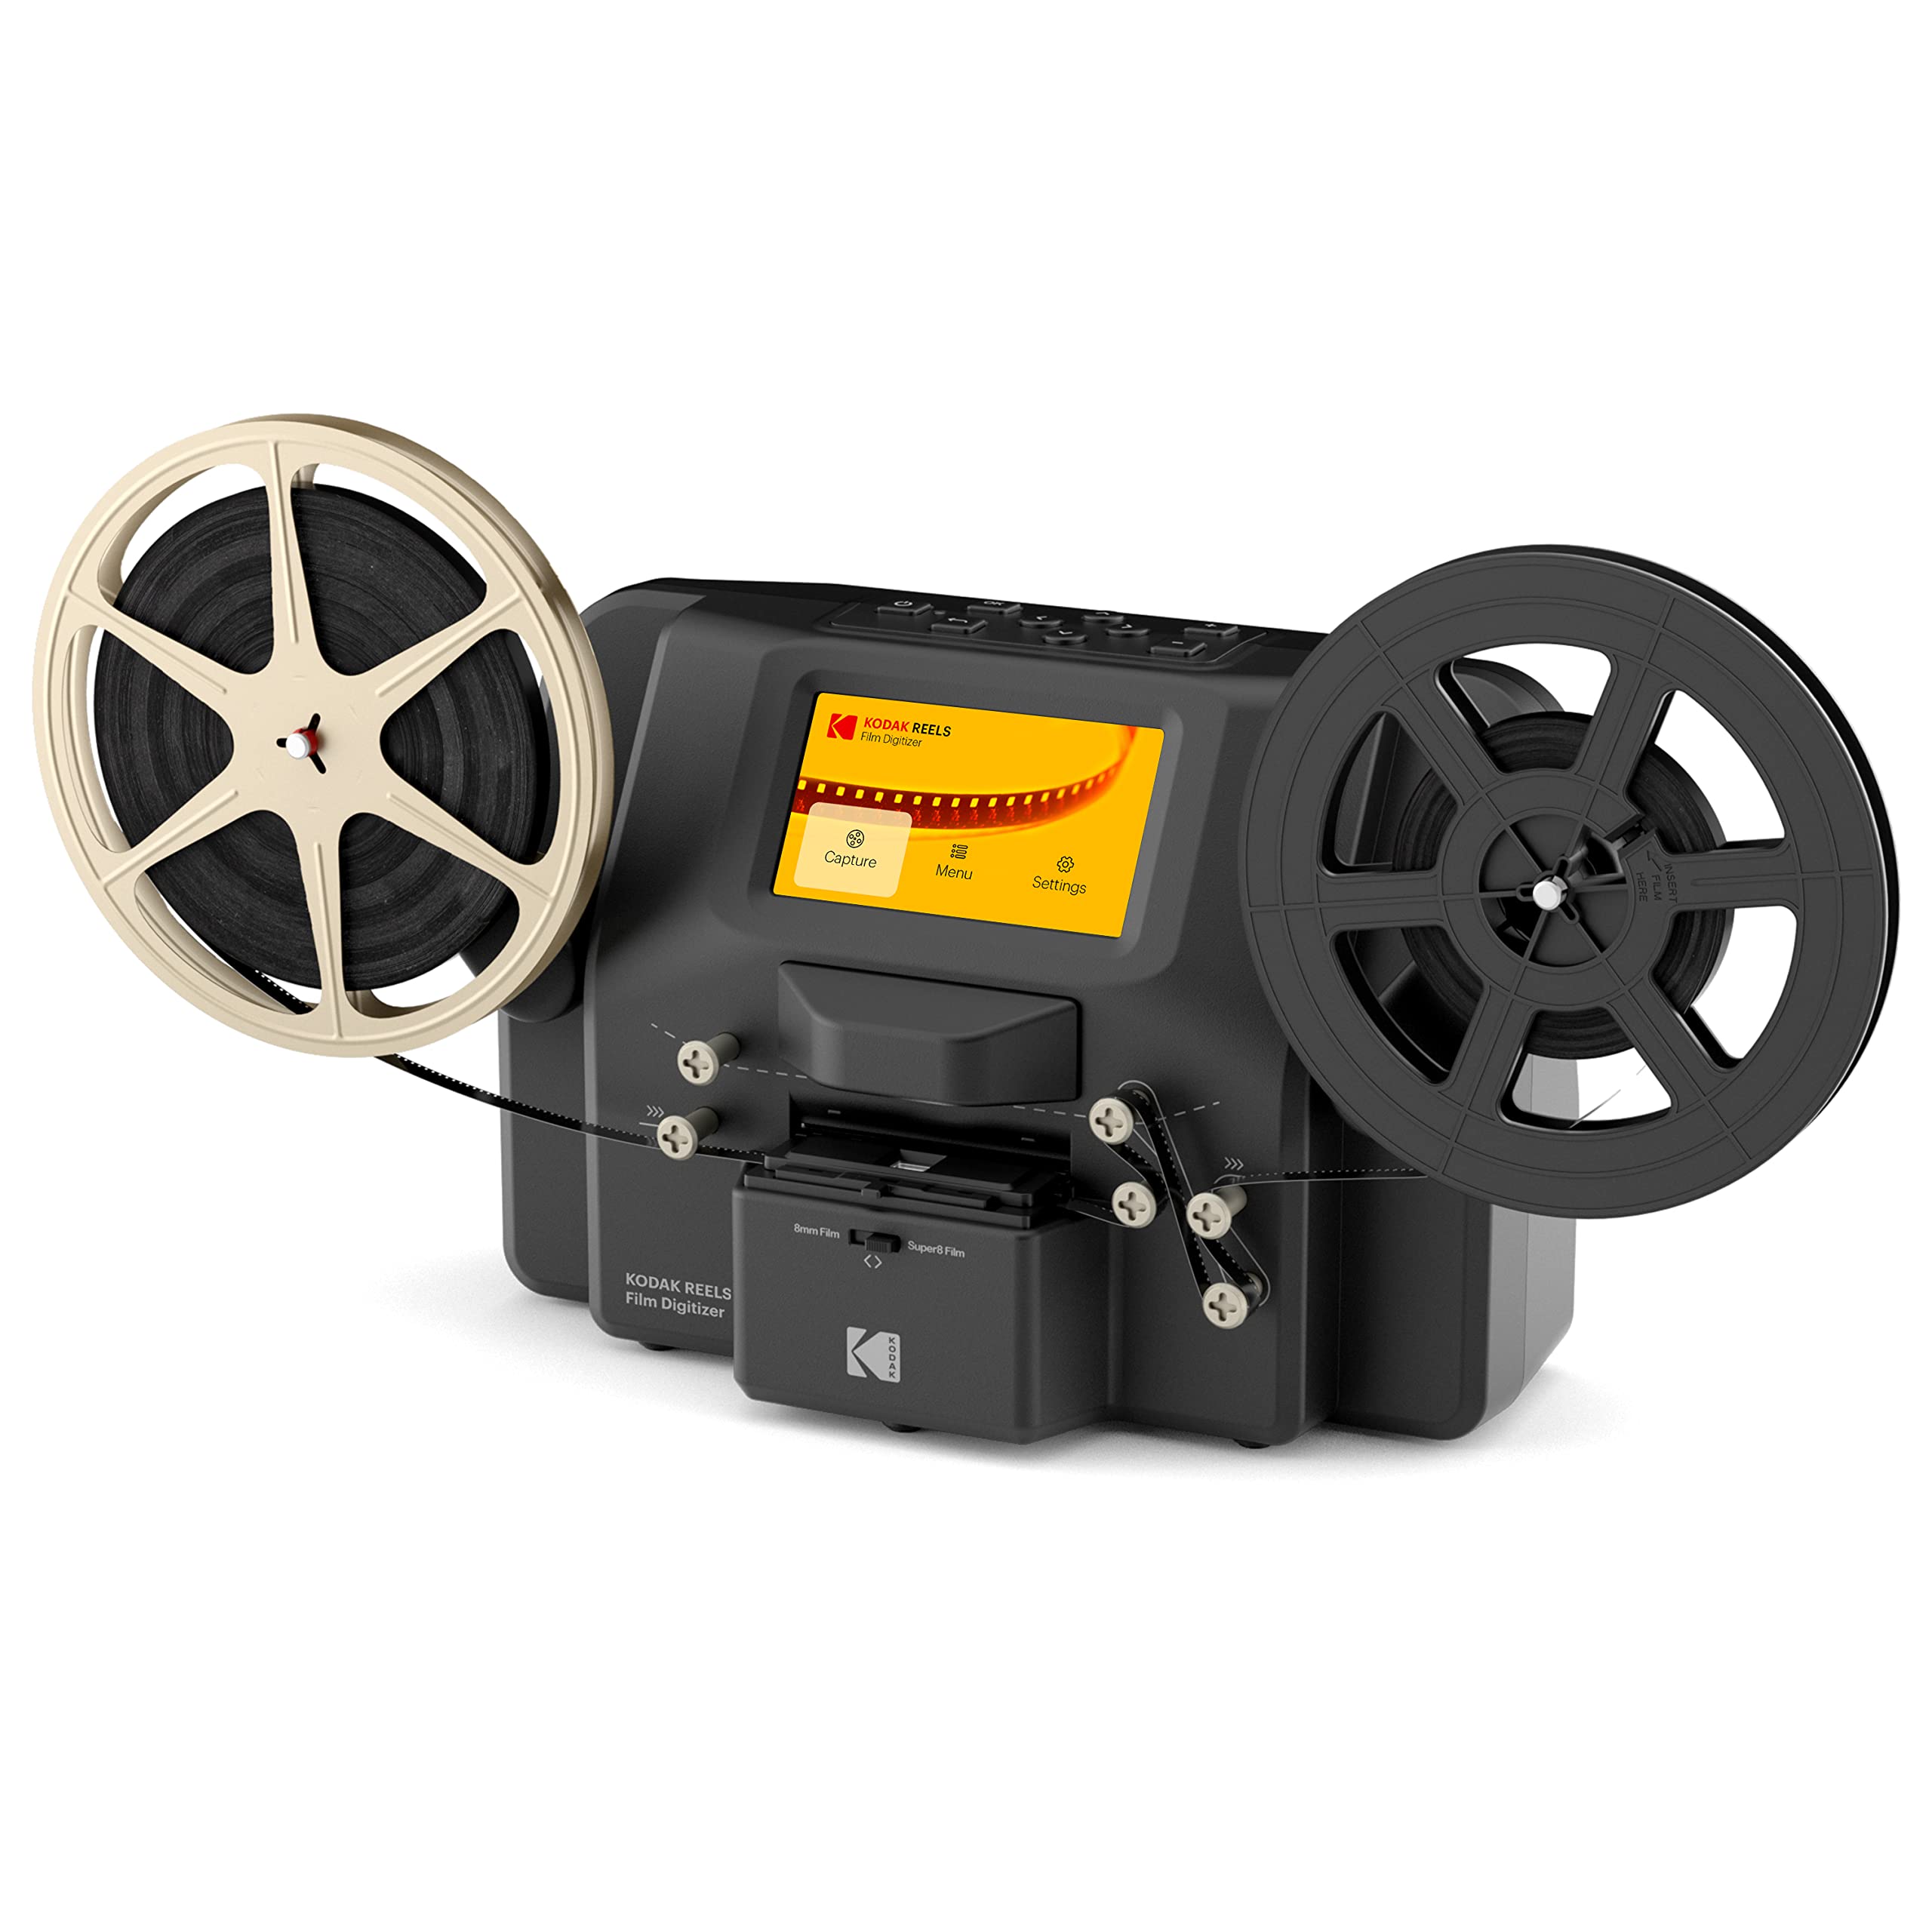 Kodak REELS 8mm & Super 8 Films Digitizer Converter wit...